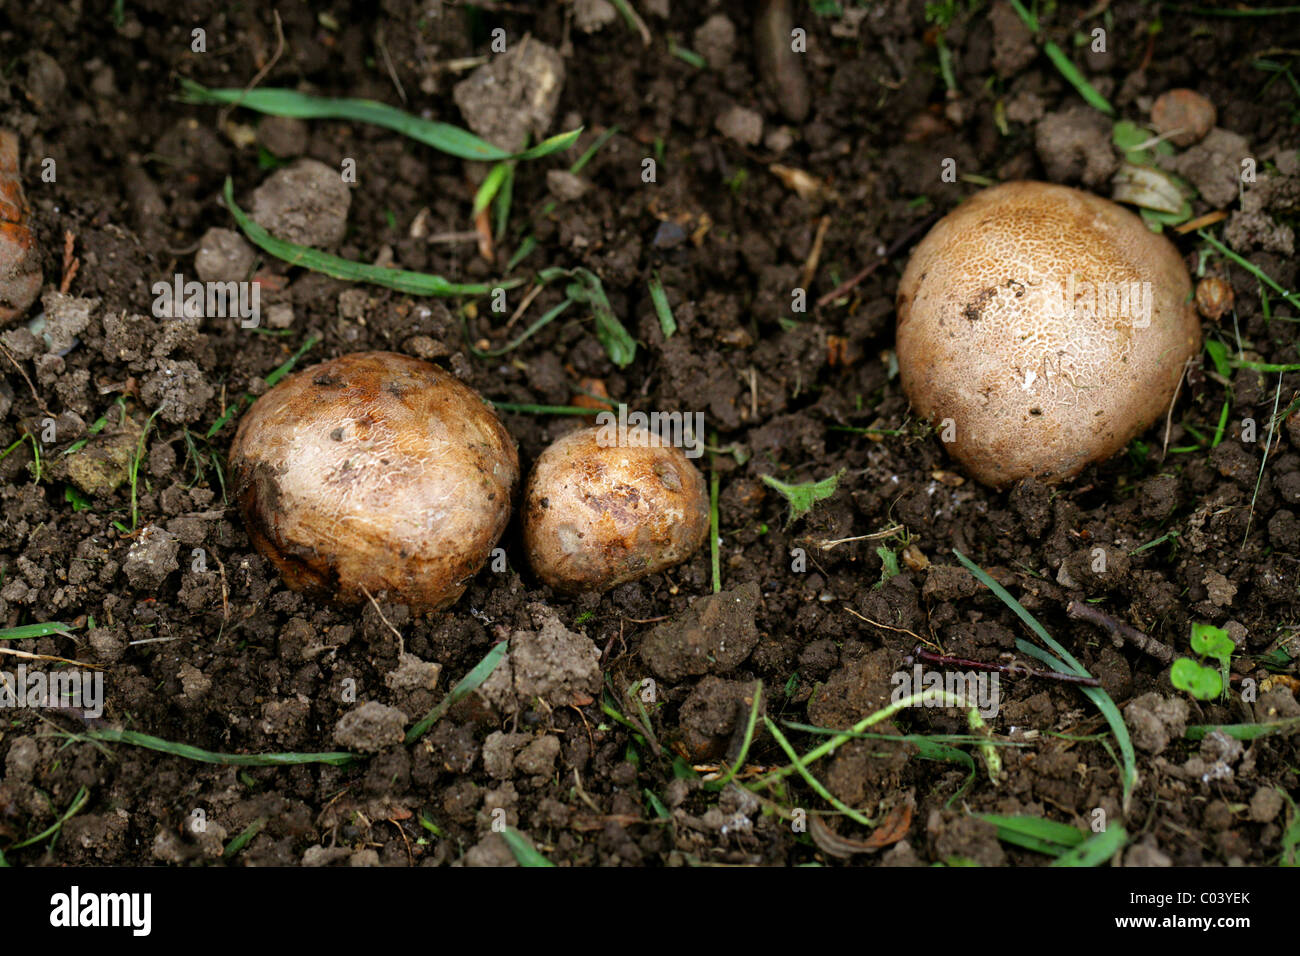 Earthball, Scleroderma cepa, Sclerodermataceae. Growing in a Garden Flowerbed. Stock Photo